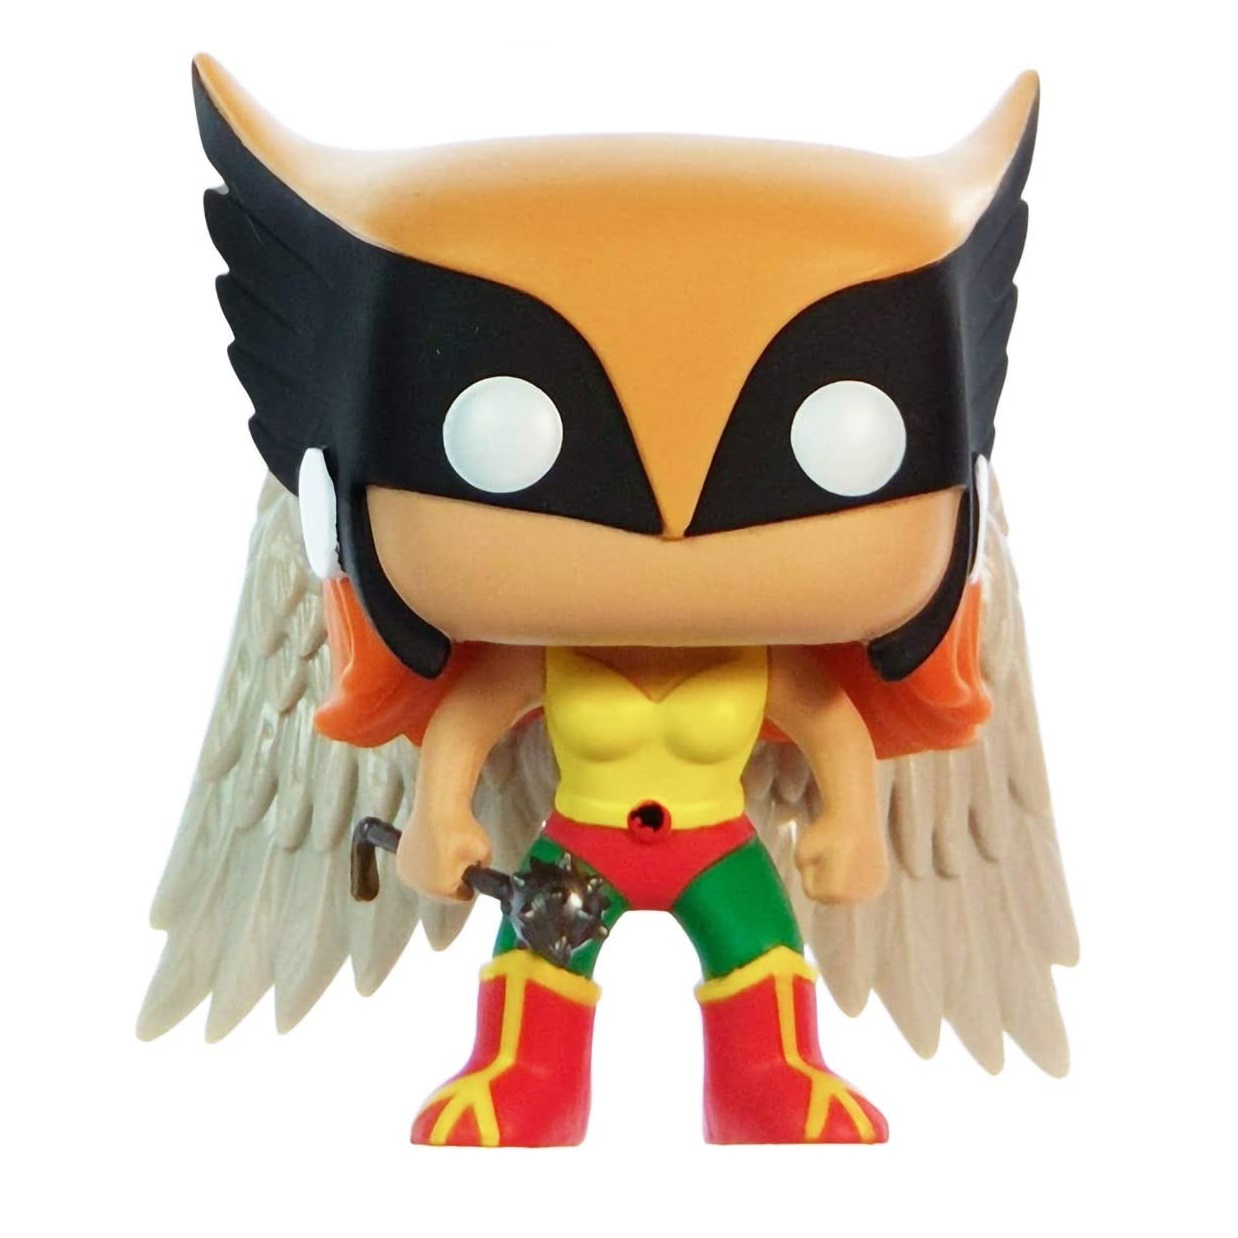 Hawkgirl #138 Exclusivo Legion Of Collectors Funko Pop!